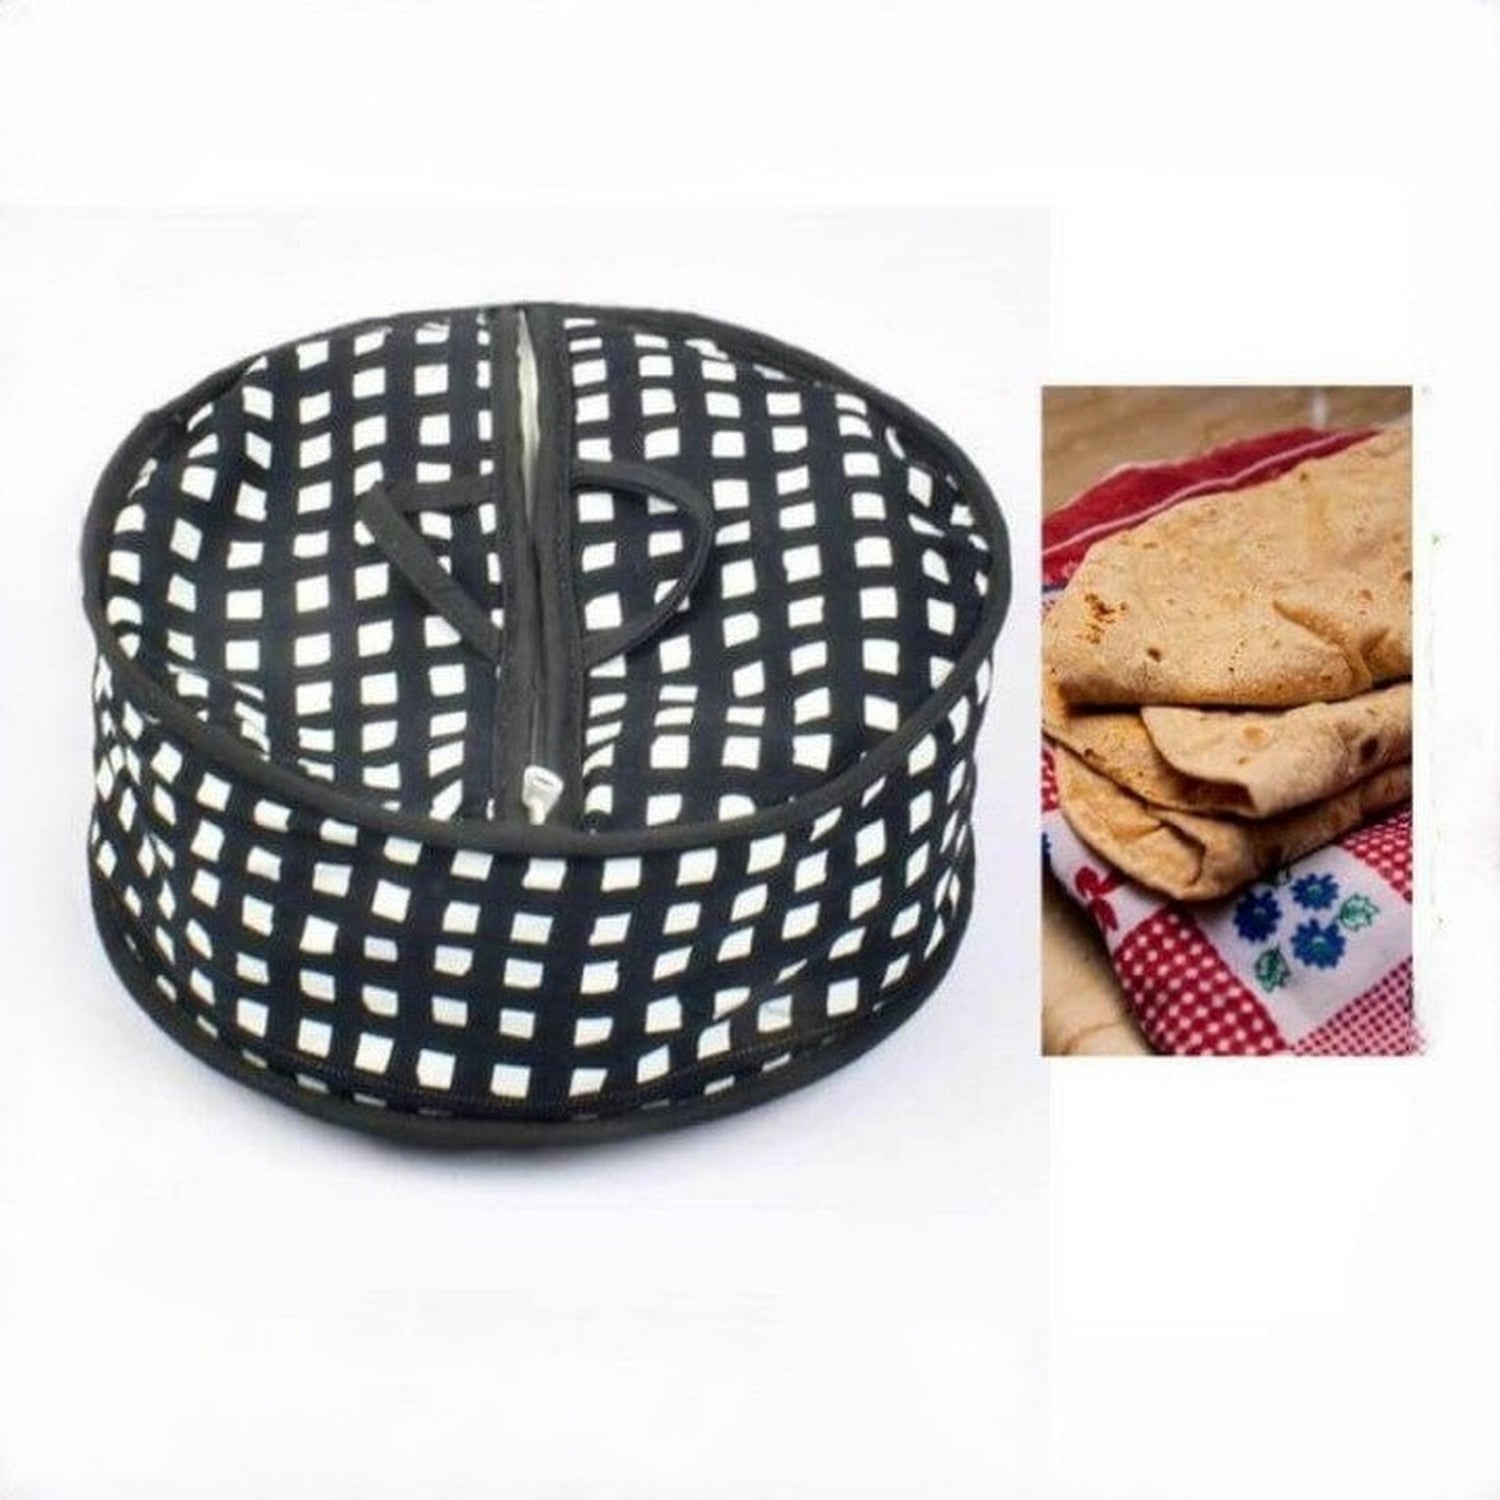 Cotton Zip Roti Box Basket Zipper Cover Multi Designs - FlyingCart.pk